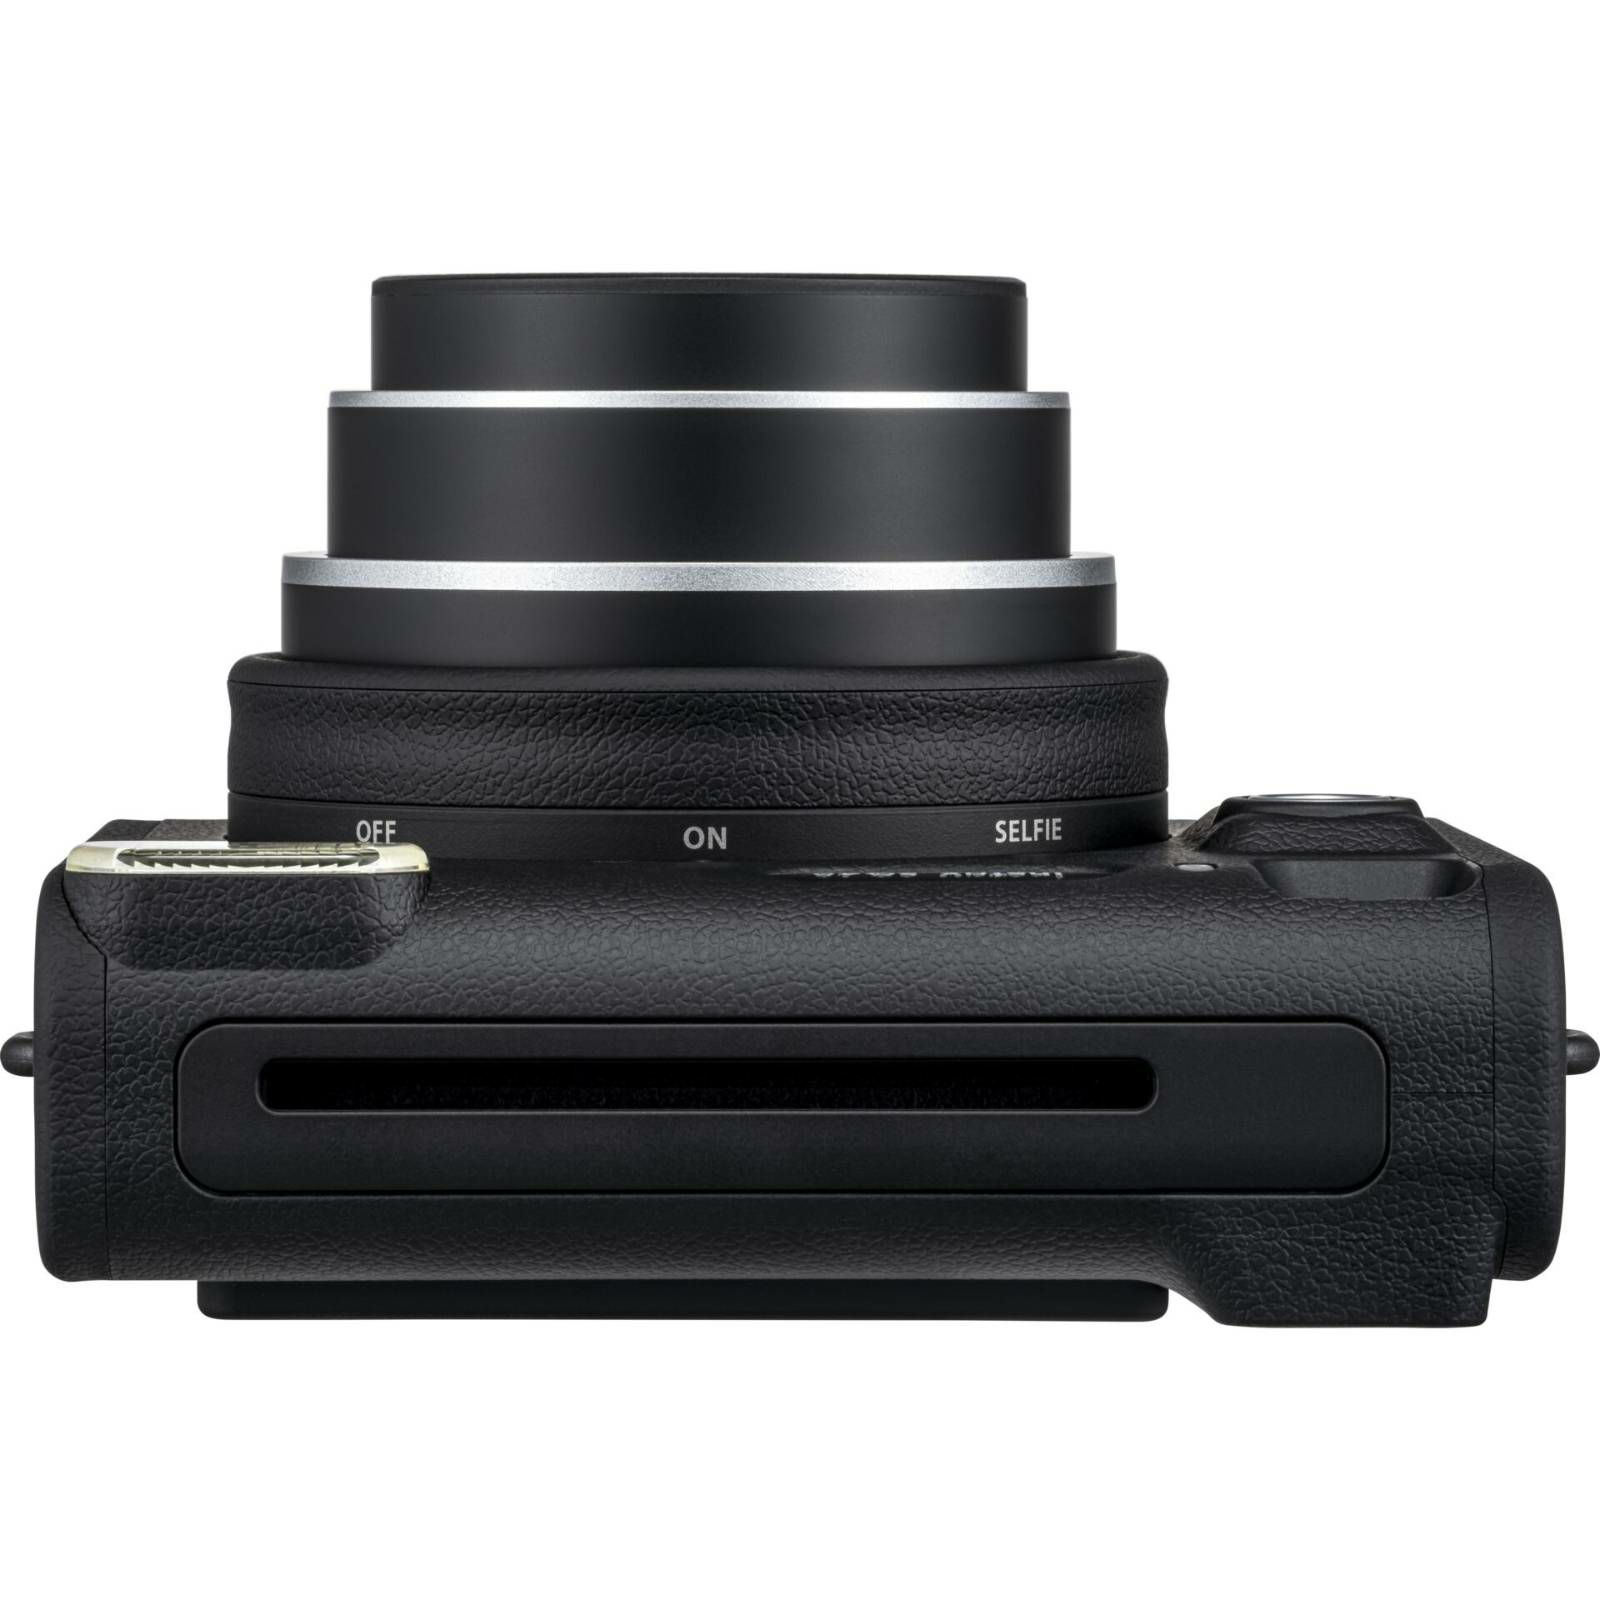 Fujifilm Instax Square SQ40 Black Fuji fotoaparat s trenutnim ispisom fotografije 